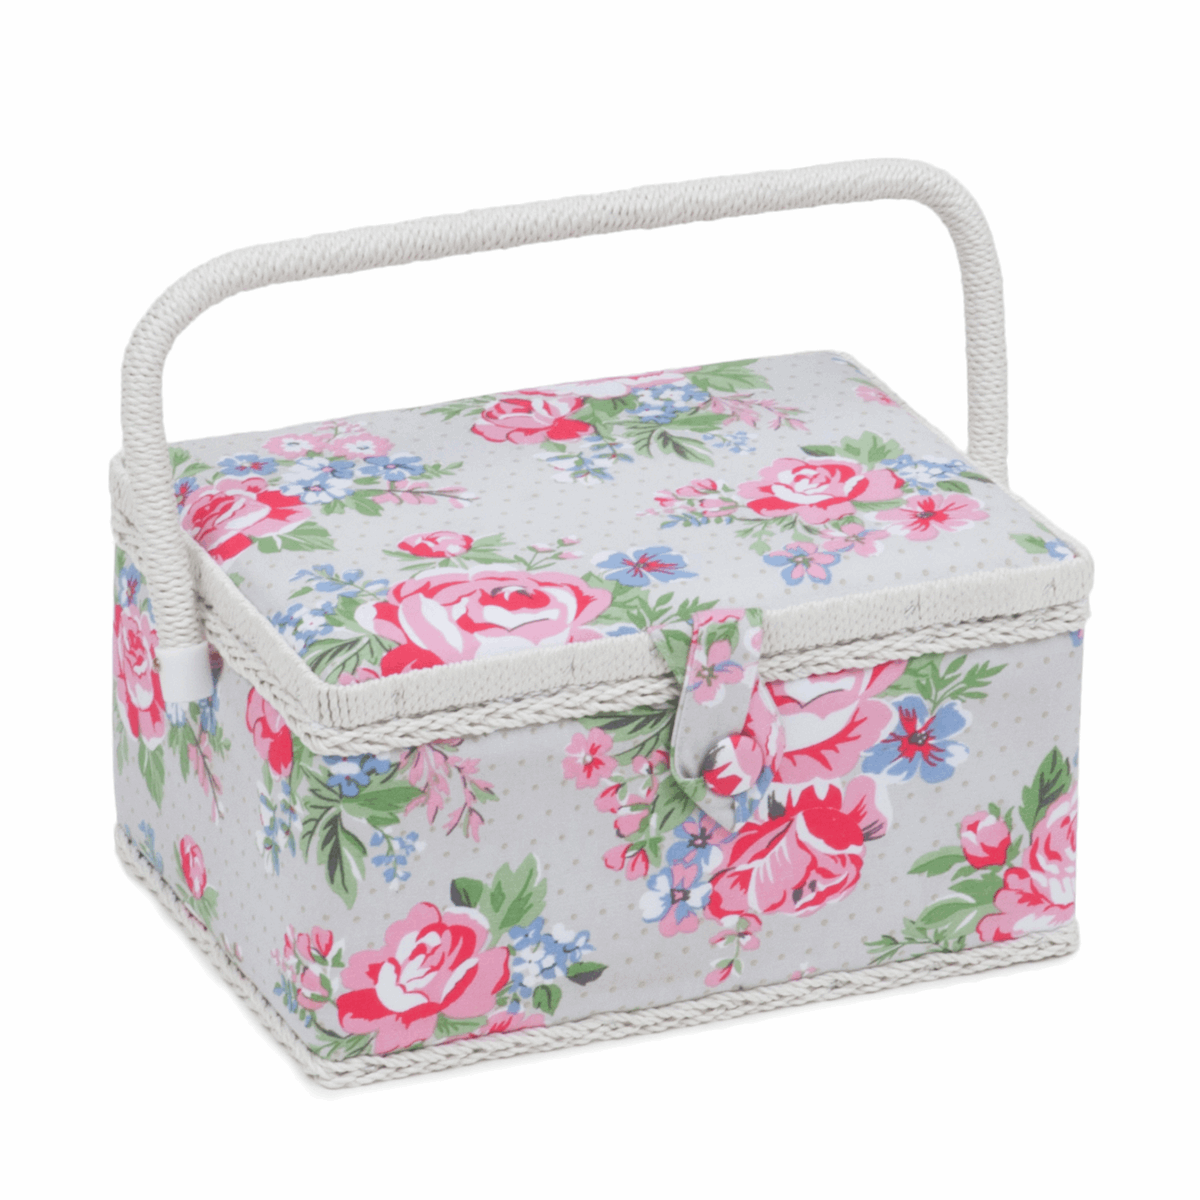 Rose Sewing Box - Medium